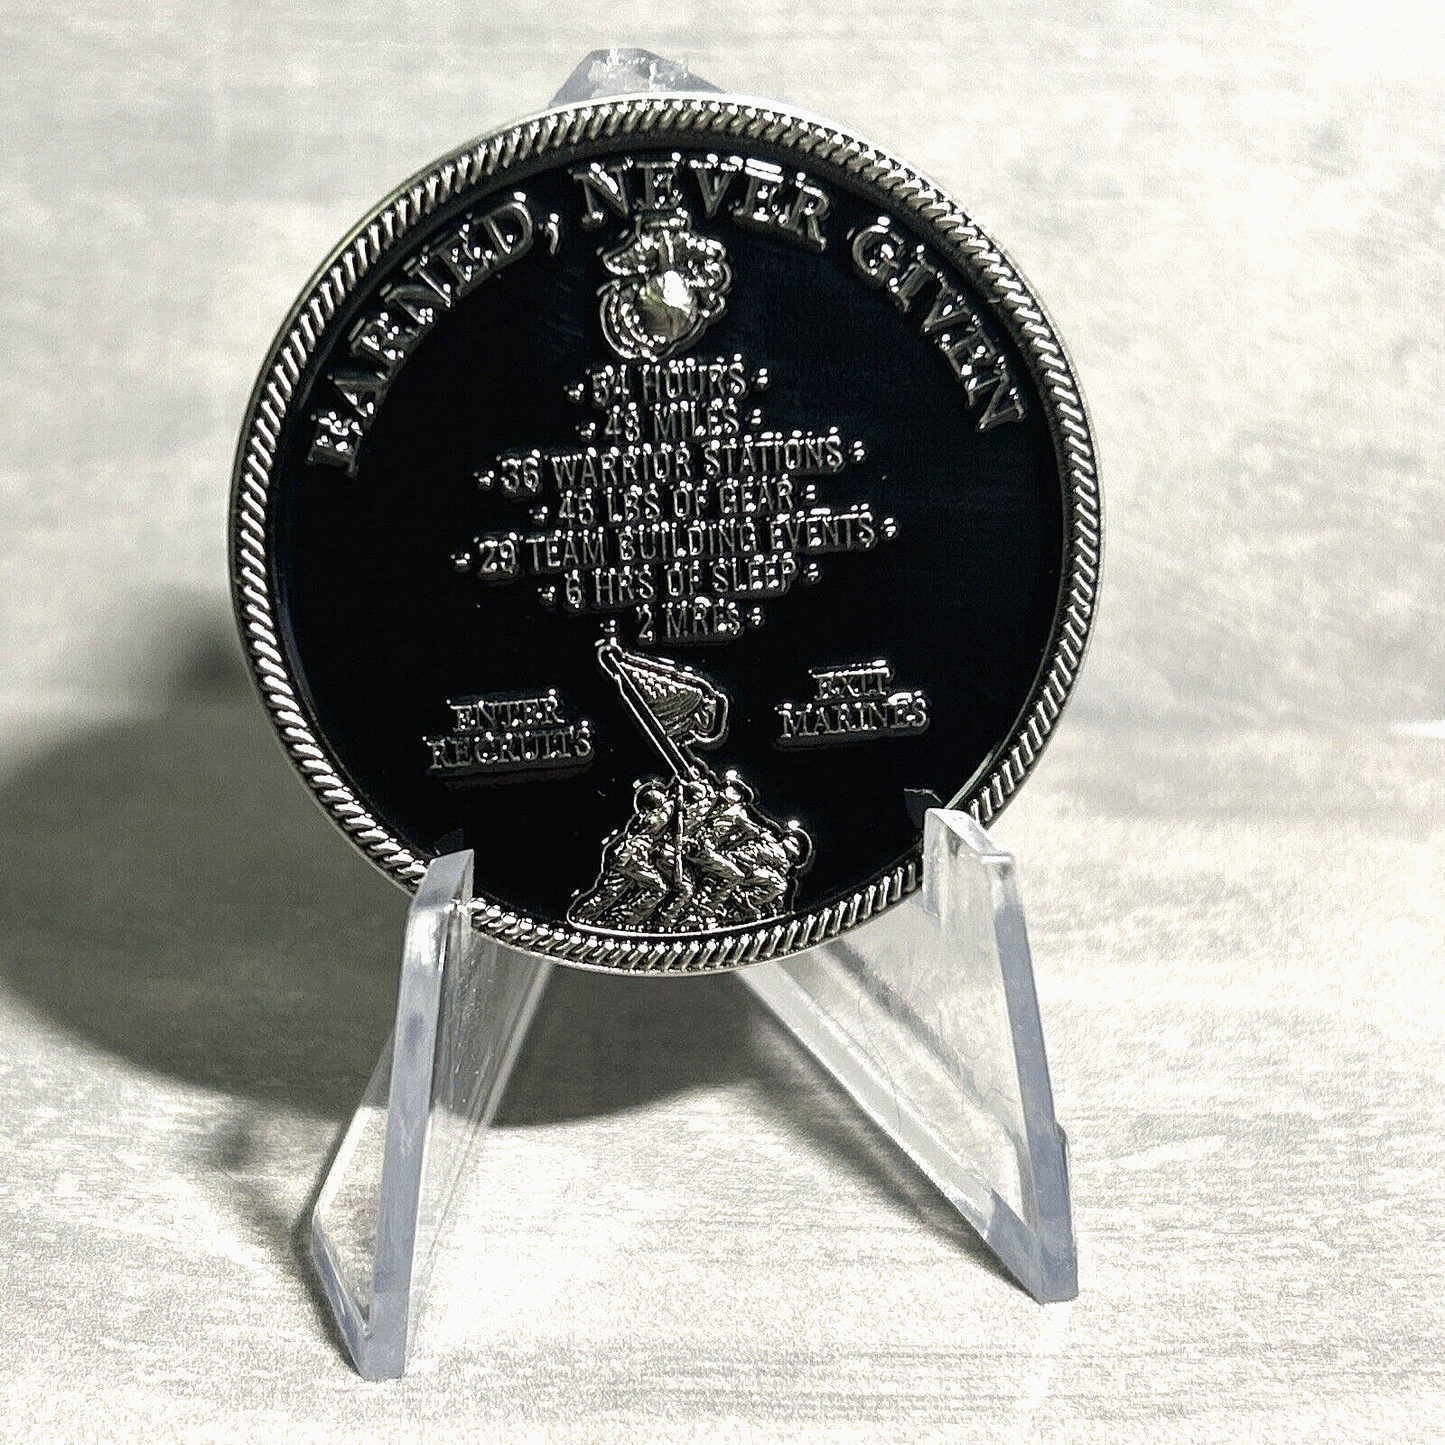 USMC Parris Island Crucible Challenge Coin